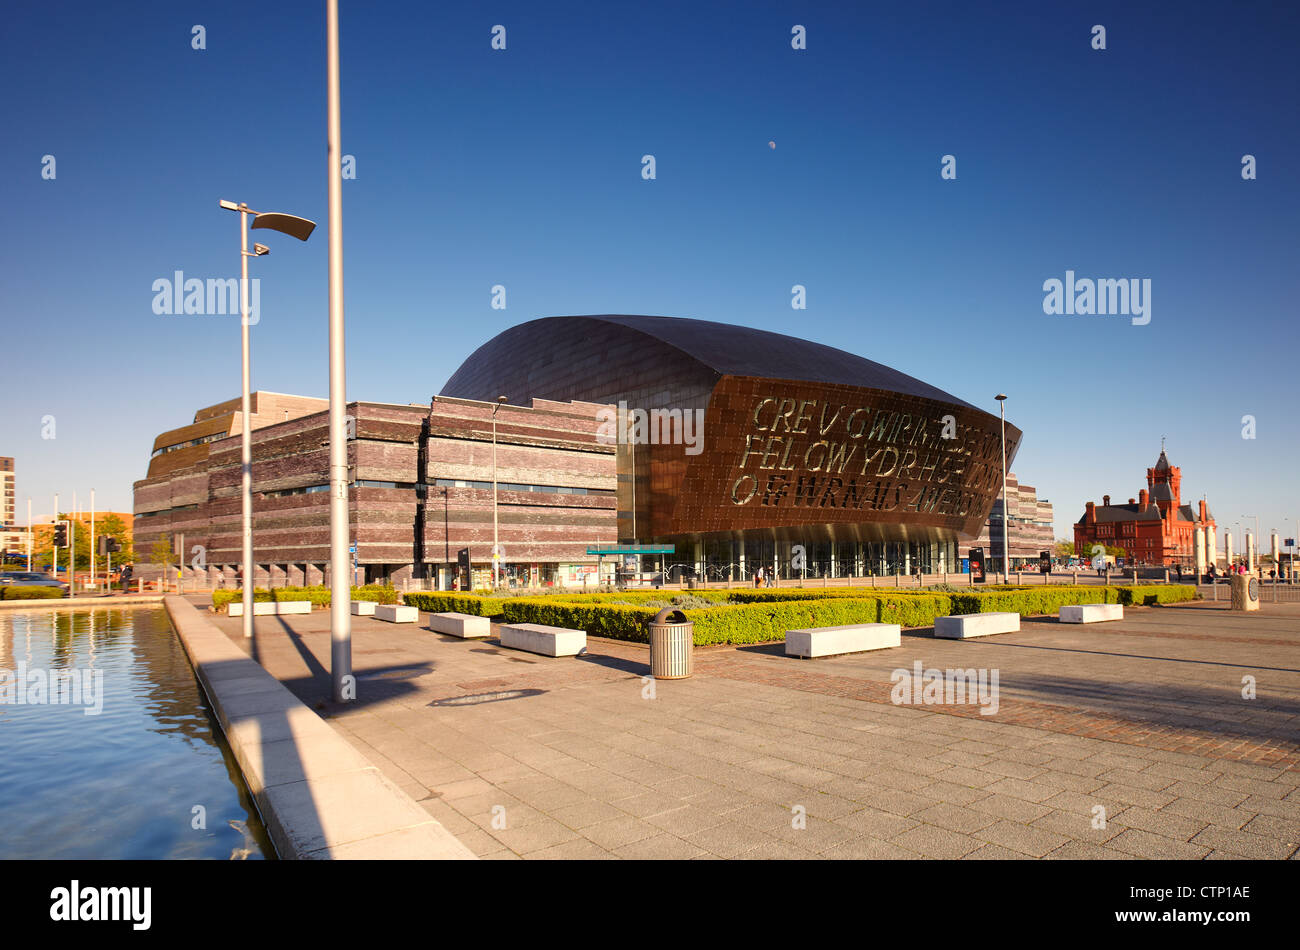 Wales Millennium Centre, Cardiff Bay, Cardiff, Wales, UK Stock Photo